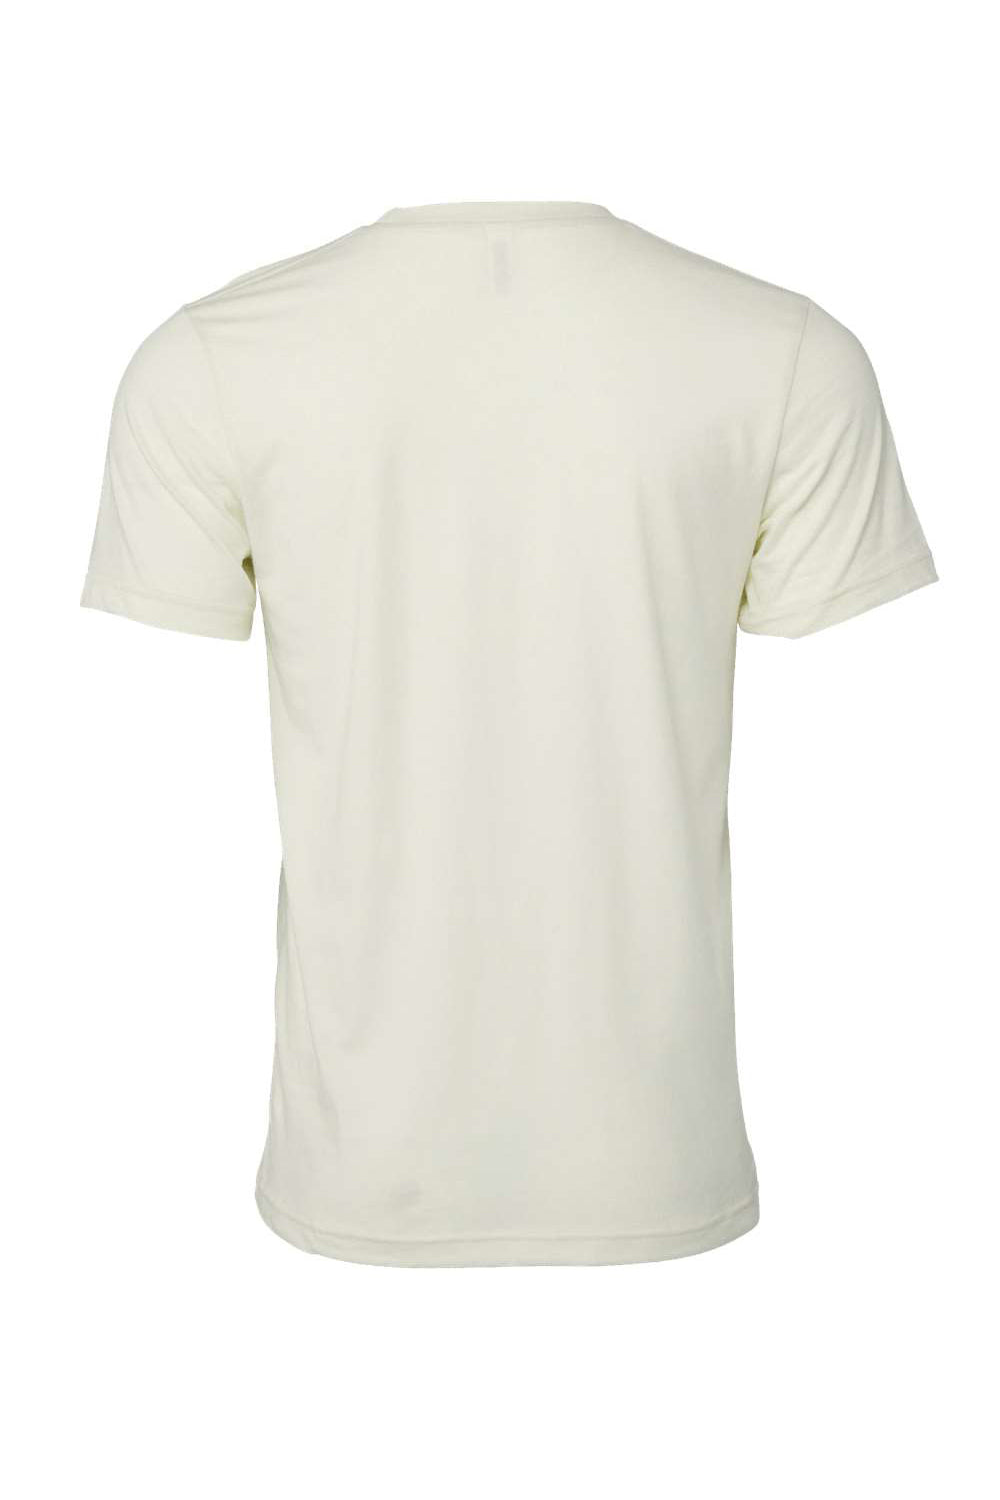 Bella + Canvas BC3001/3001C Mens Jersey Short Sleeve Crewneck T-Shirt Citron Flat Back